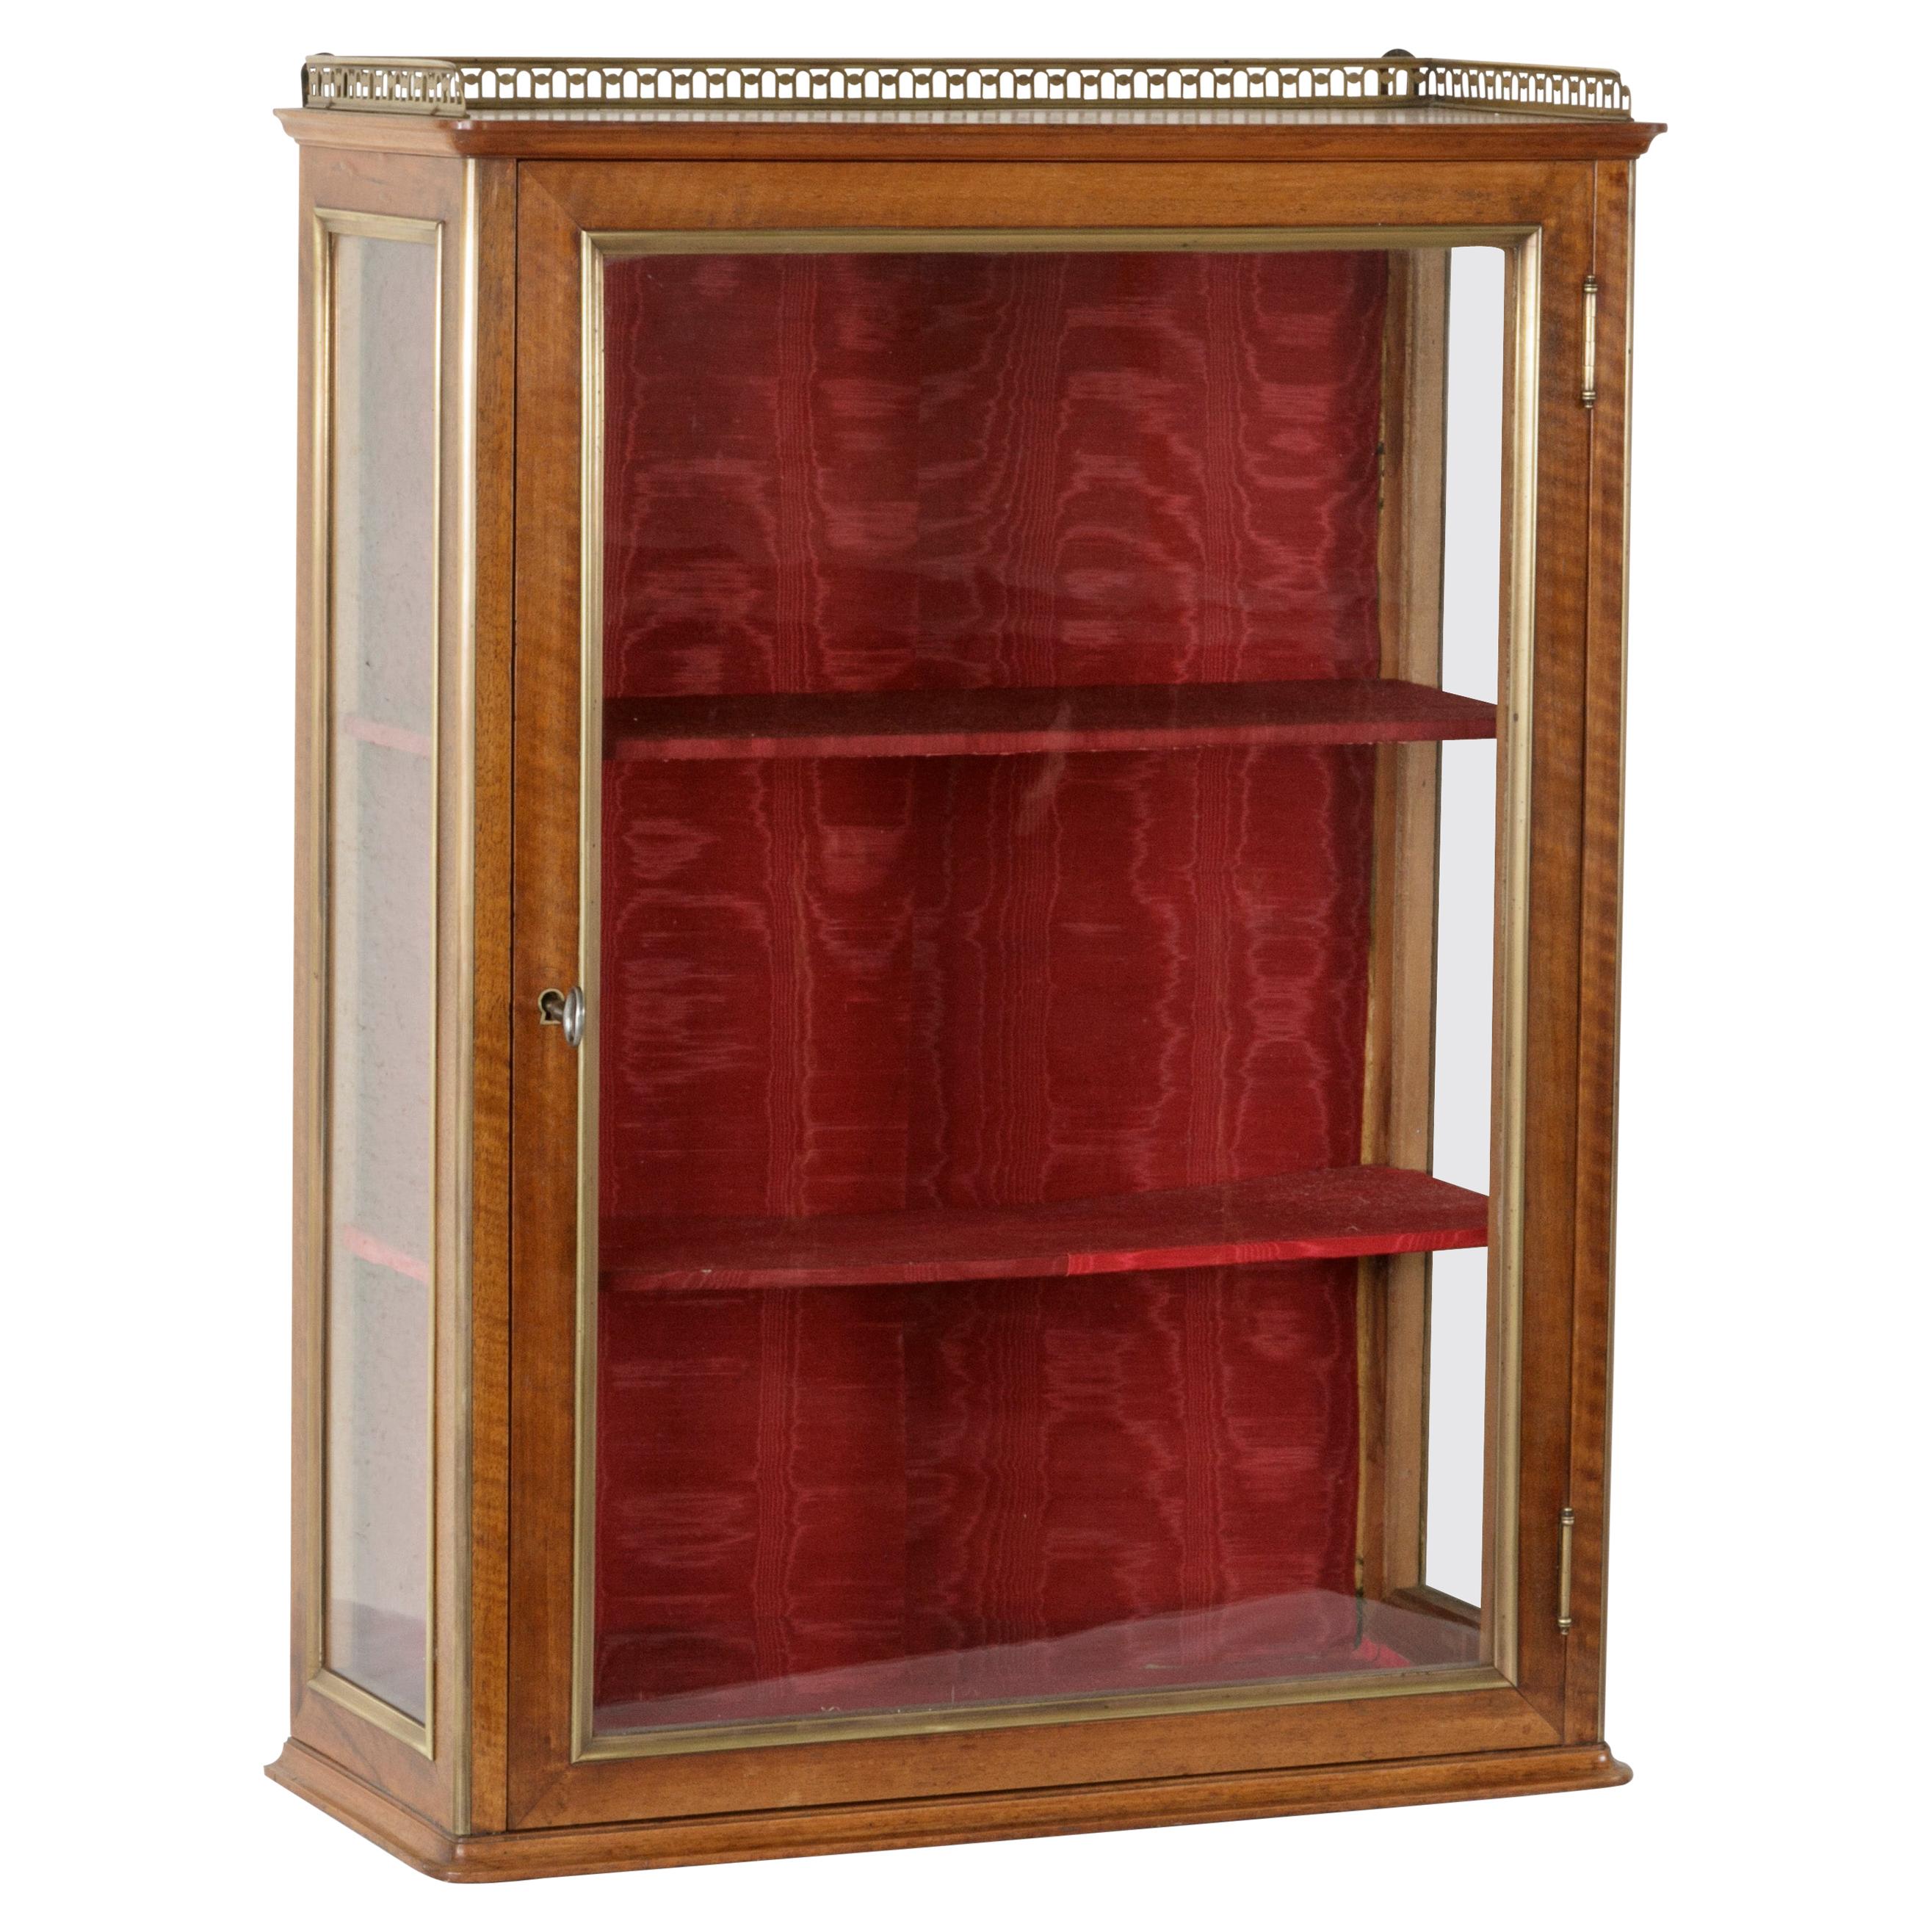 19th Century French Walnut Wall Vitrine or Display Cabinet with Original Glass